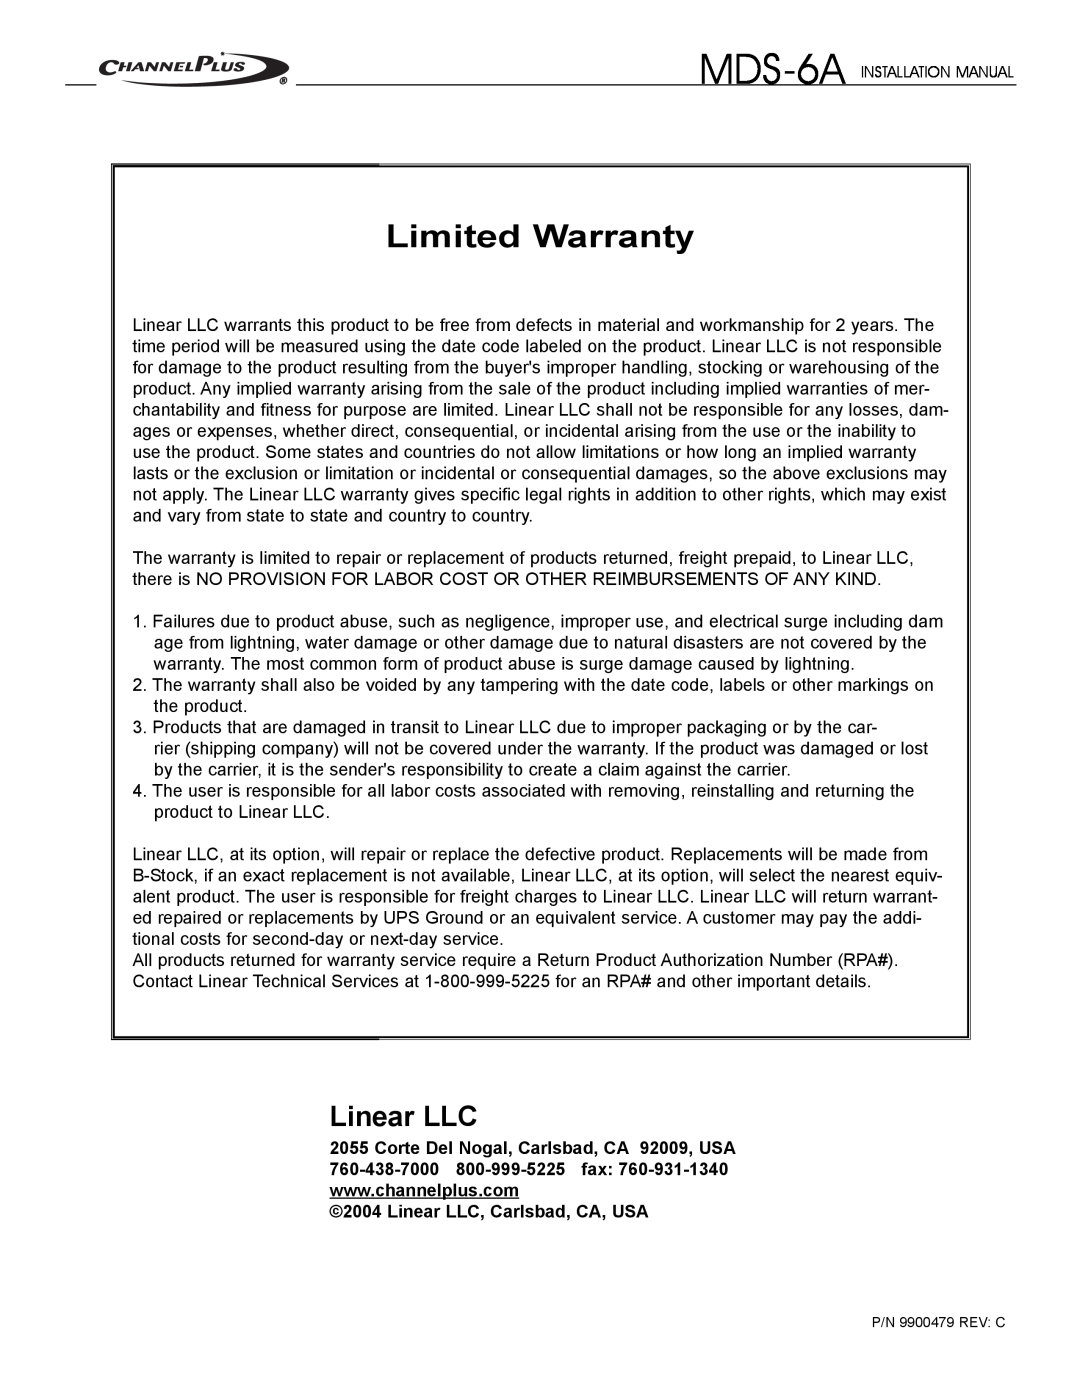 Channel Plus MDS-6A installation manual Limited Warranty, Linear LLC 